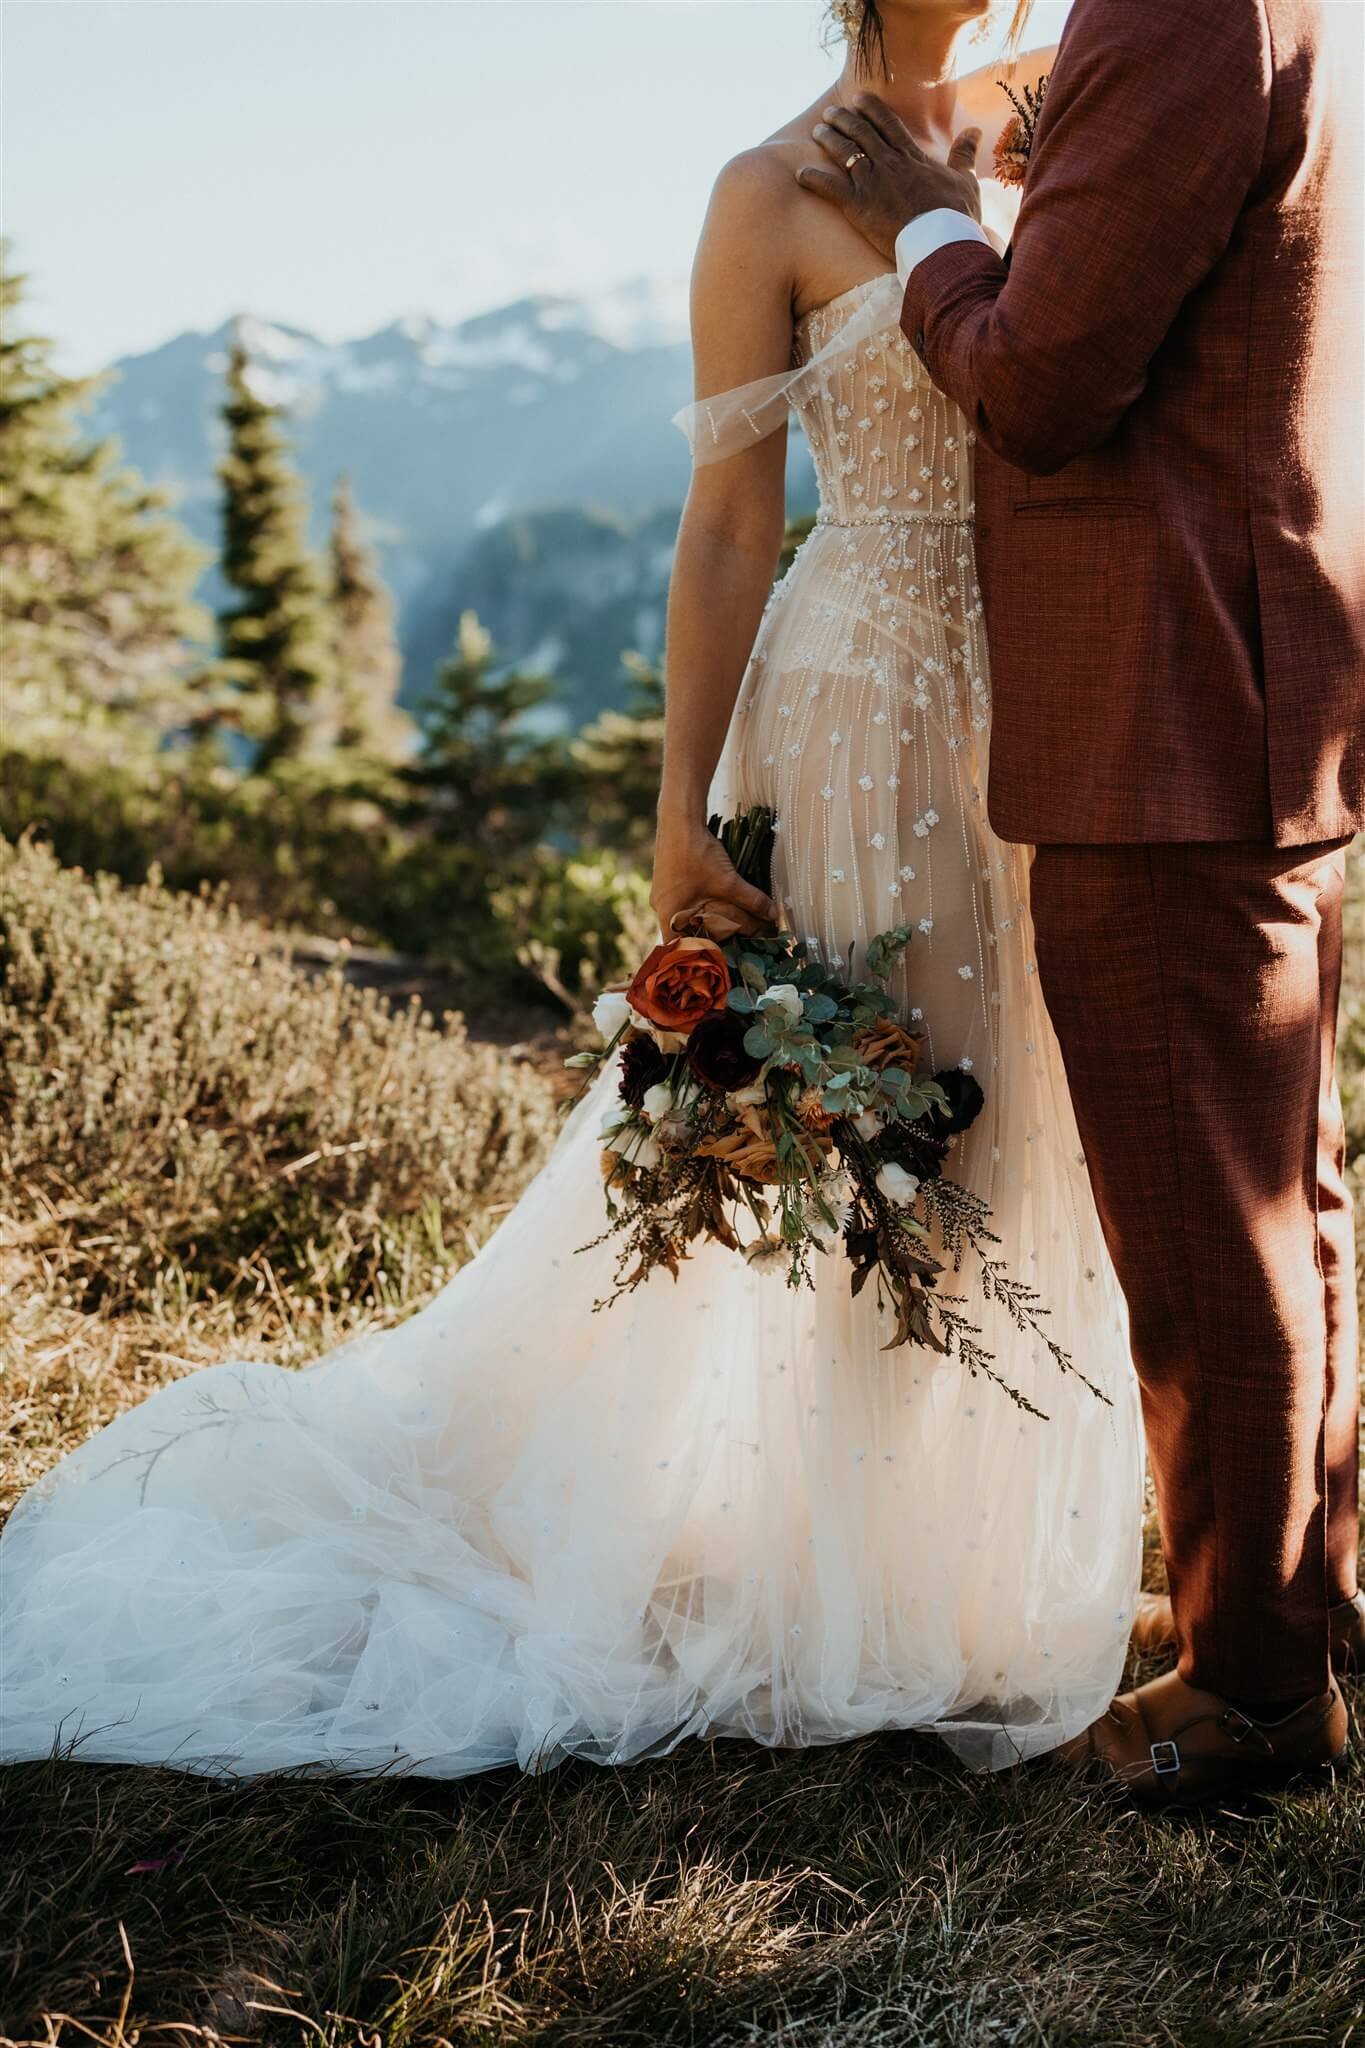 Bride and groom portrait photos at Mt Baker elopement